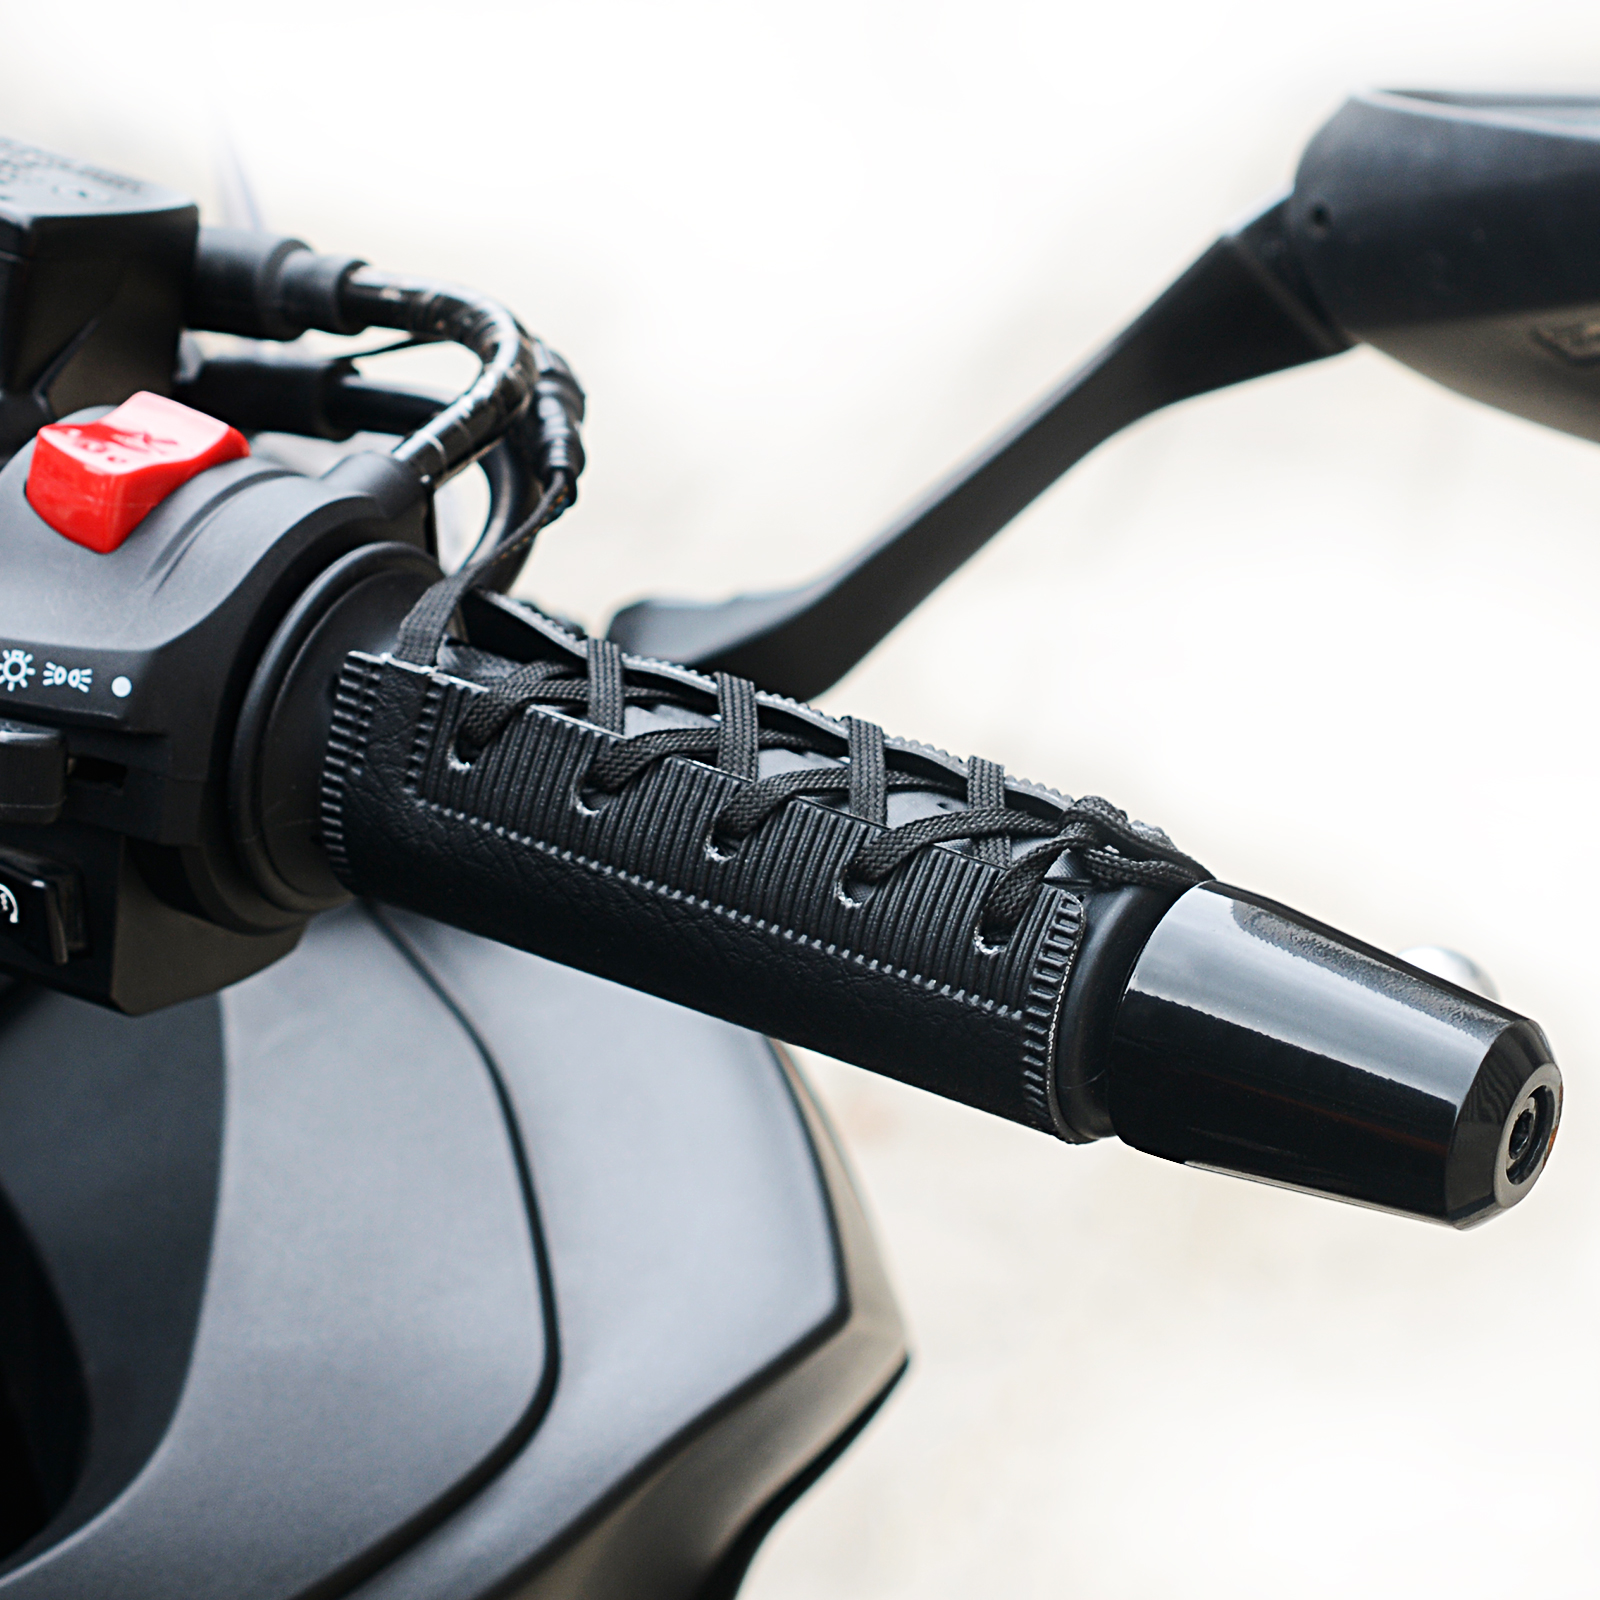 5V USB Elektrisch beheizte Lenkergriffabdeckung Wasserdichte Handwärmer Winter Motorrad Motorrad